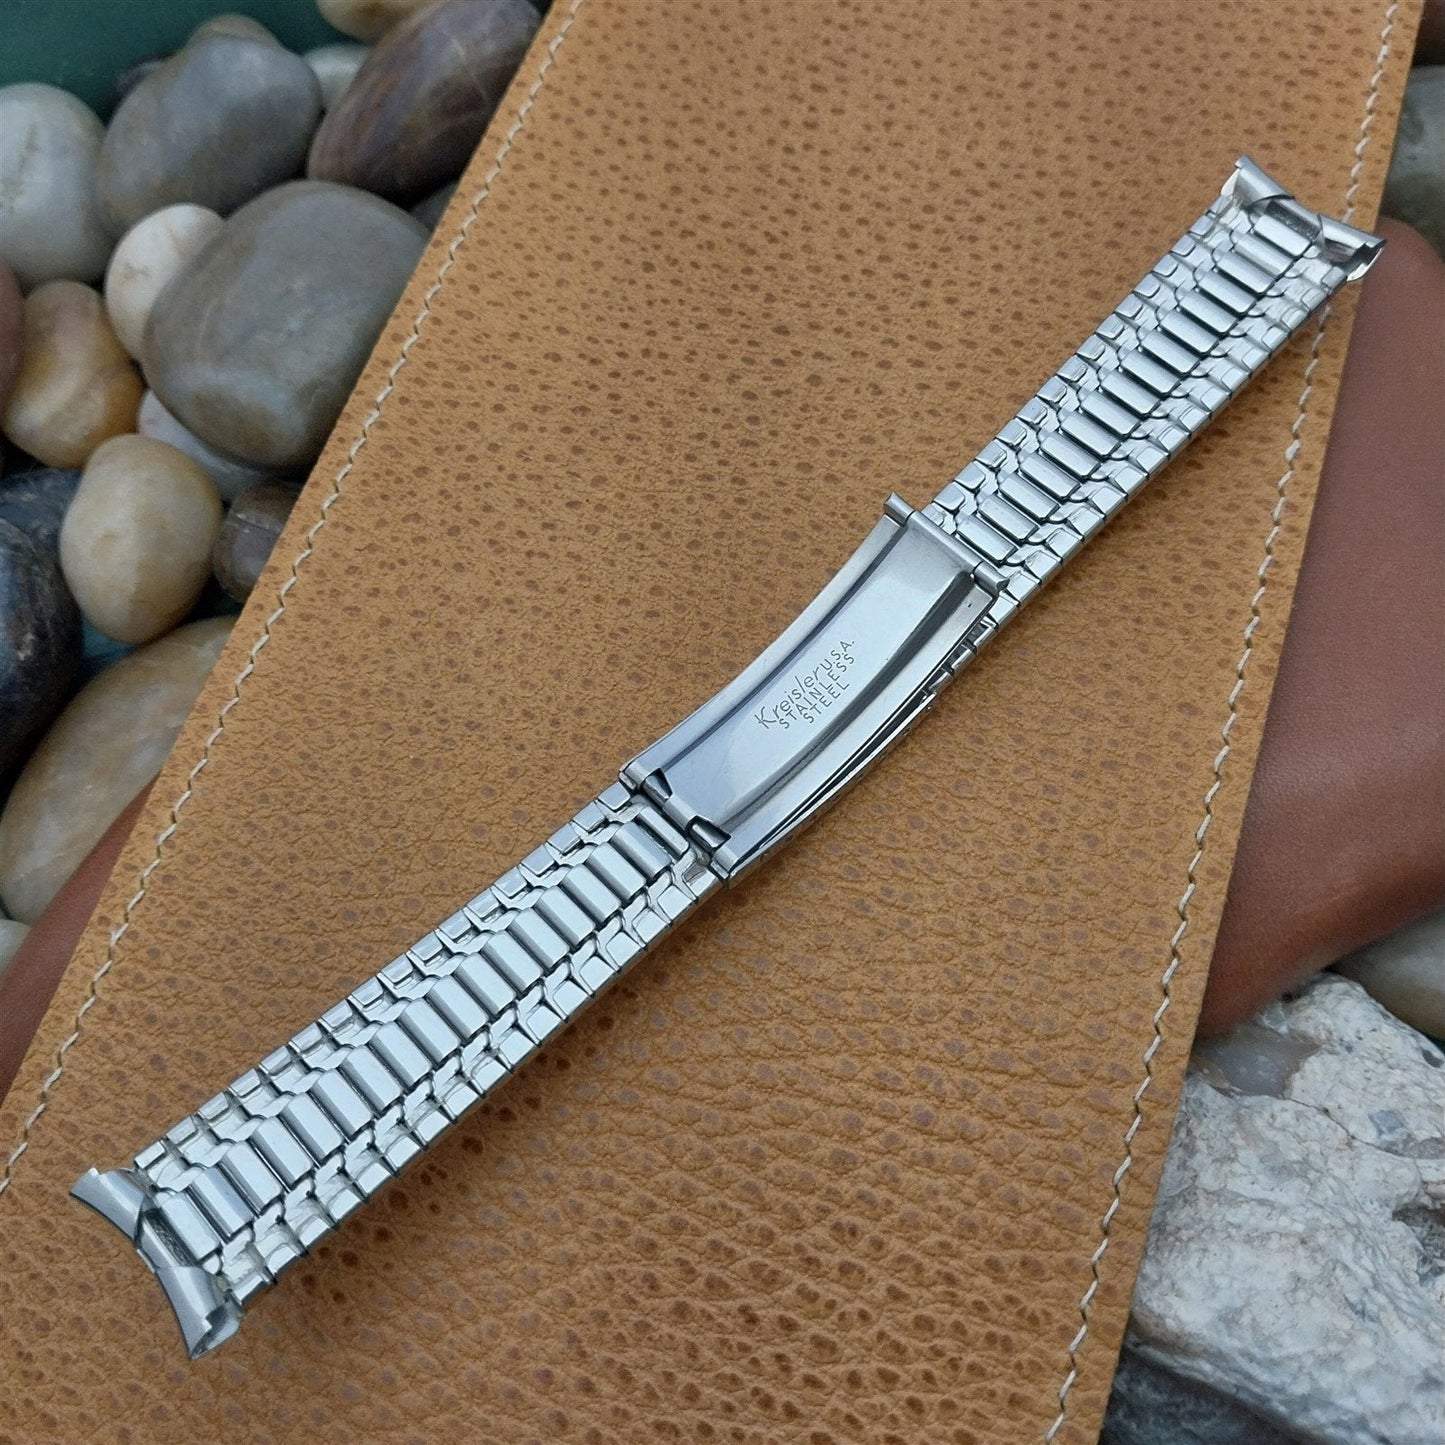 19mm 18mm 1960s Stainless Steel Classic Kreisler USA Unused Vintage Watch Band